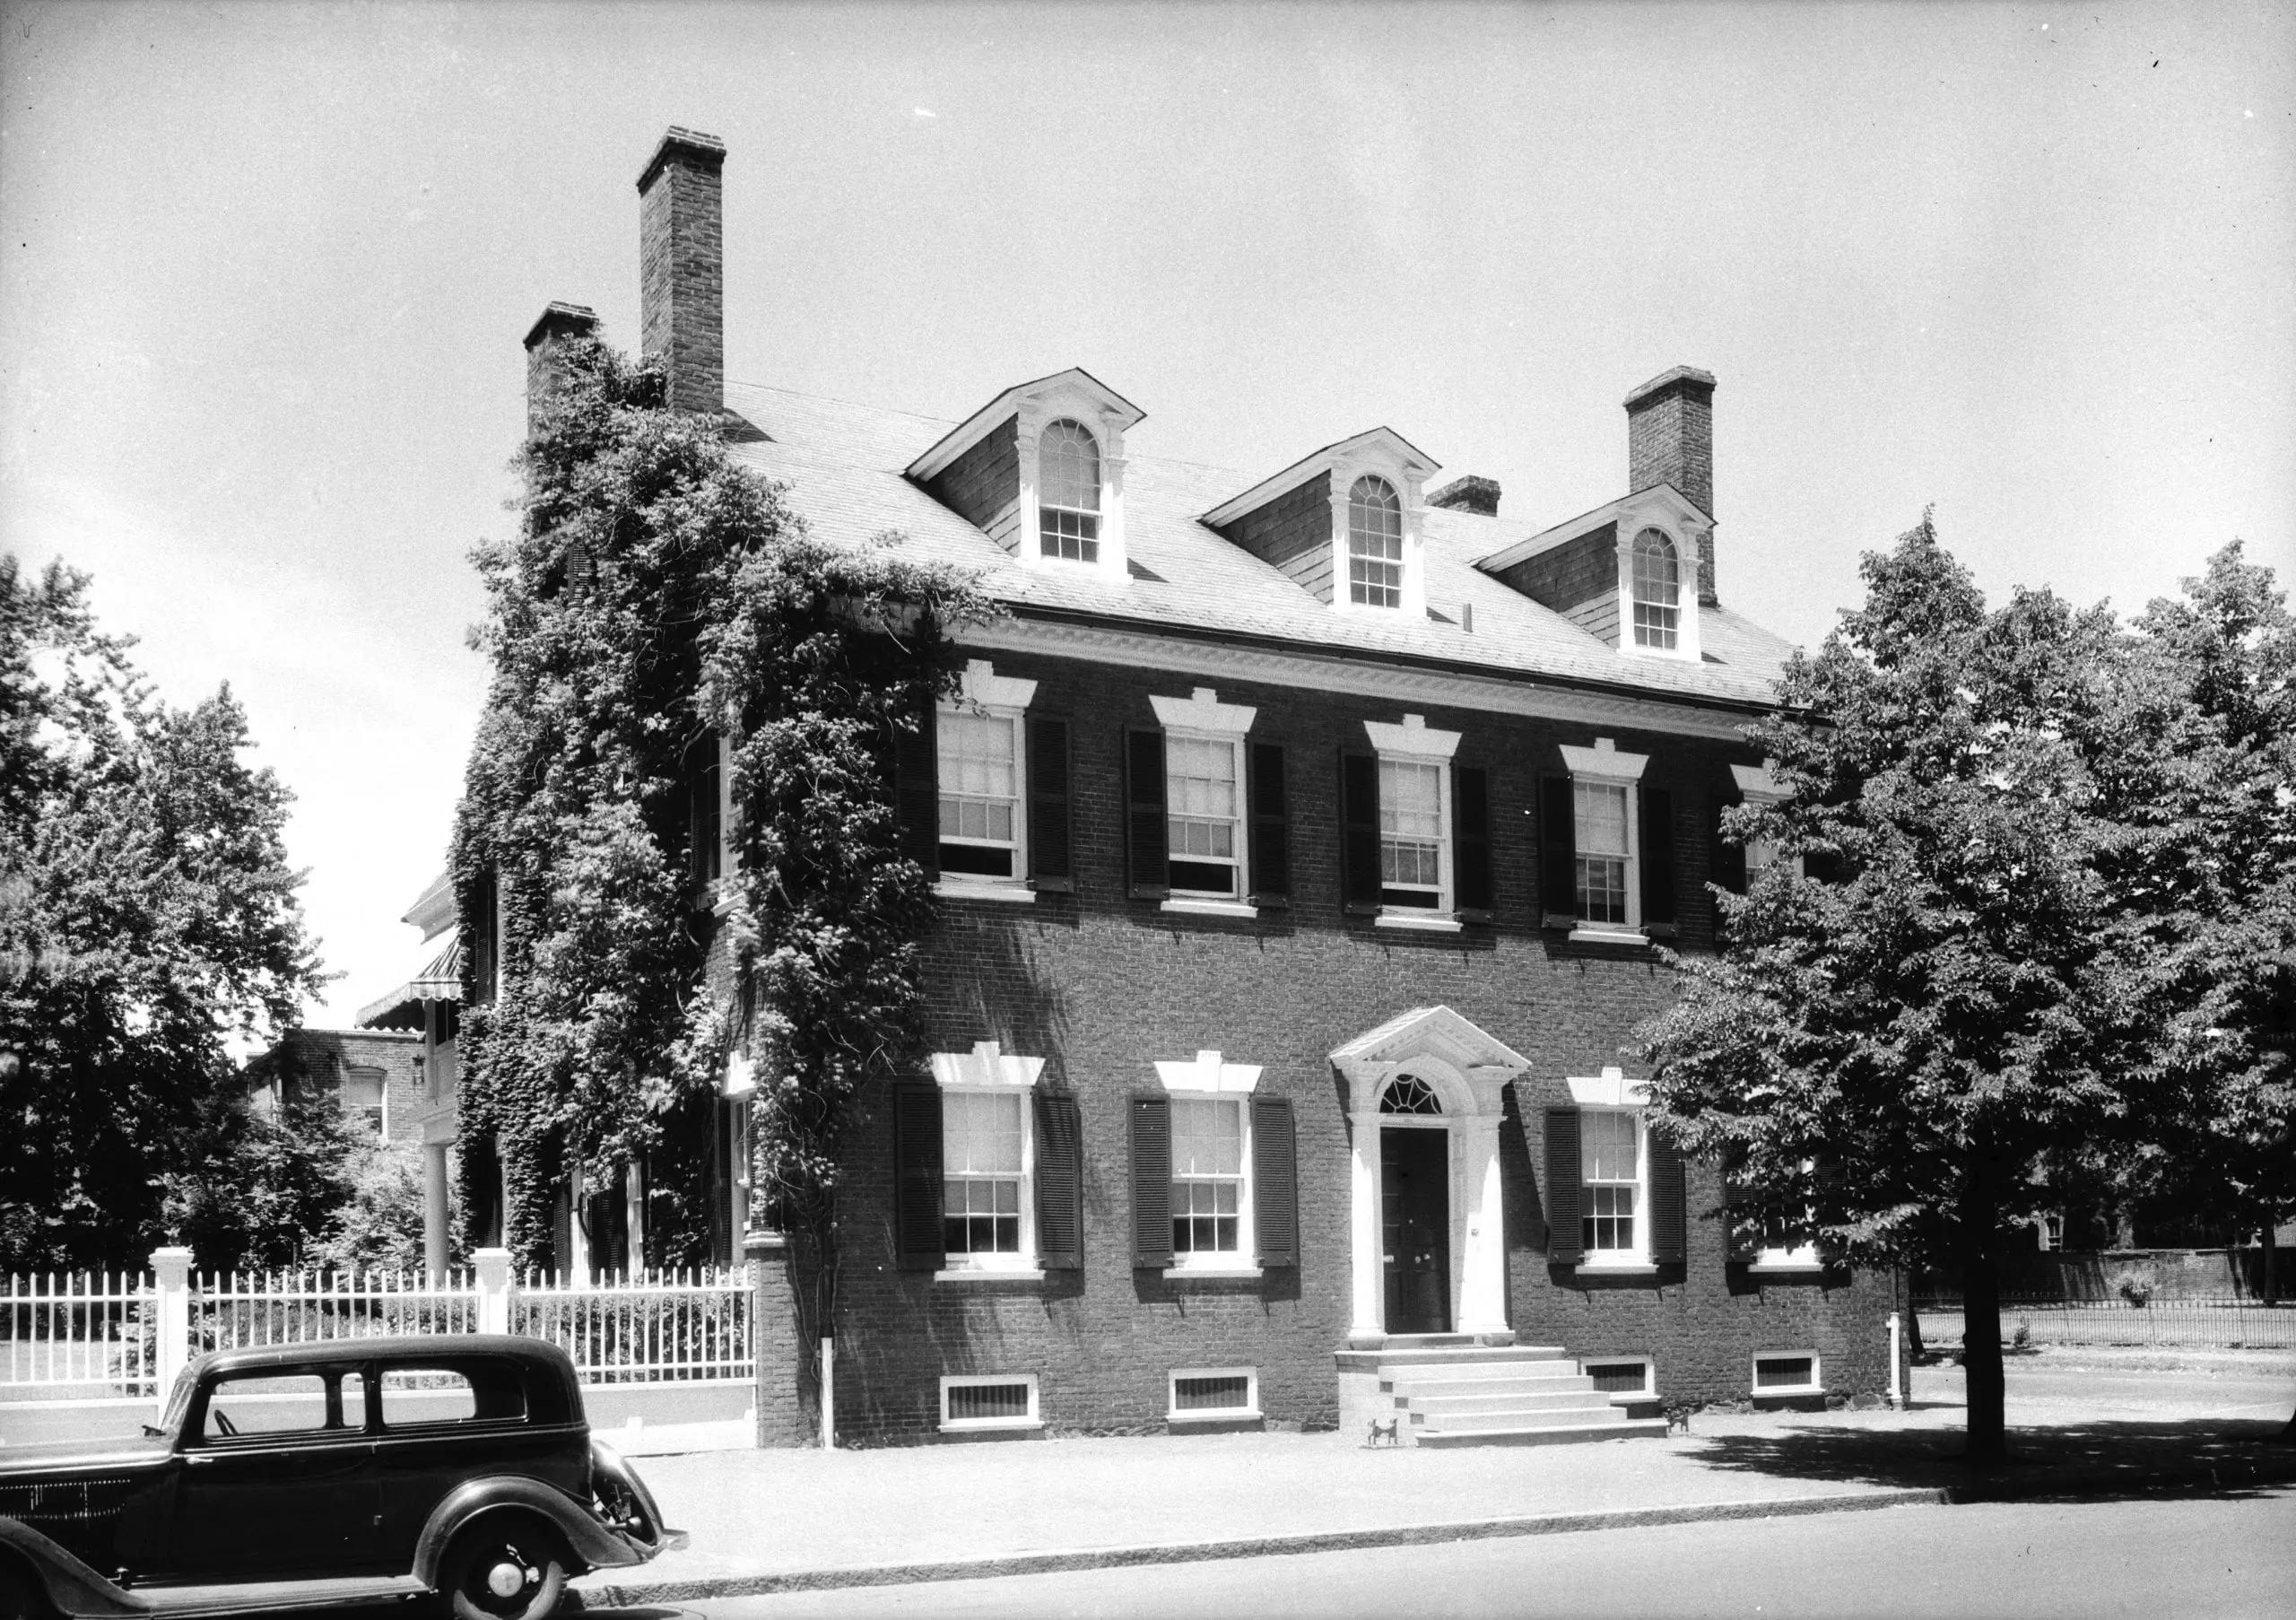 Wise-Hooe-Lloyd House, 220 North Washington Street